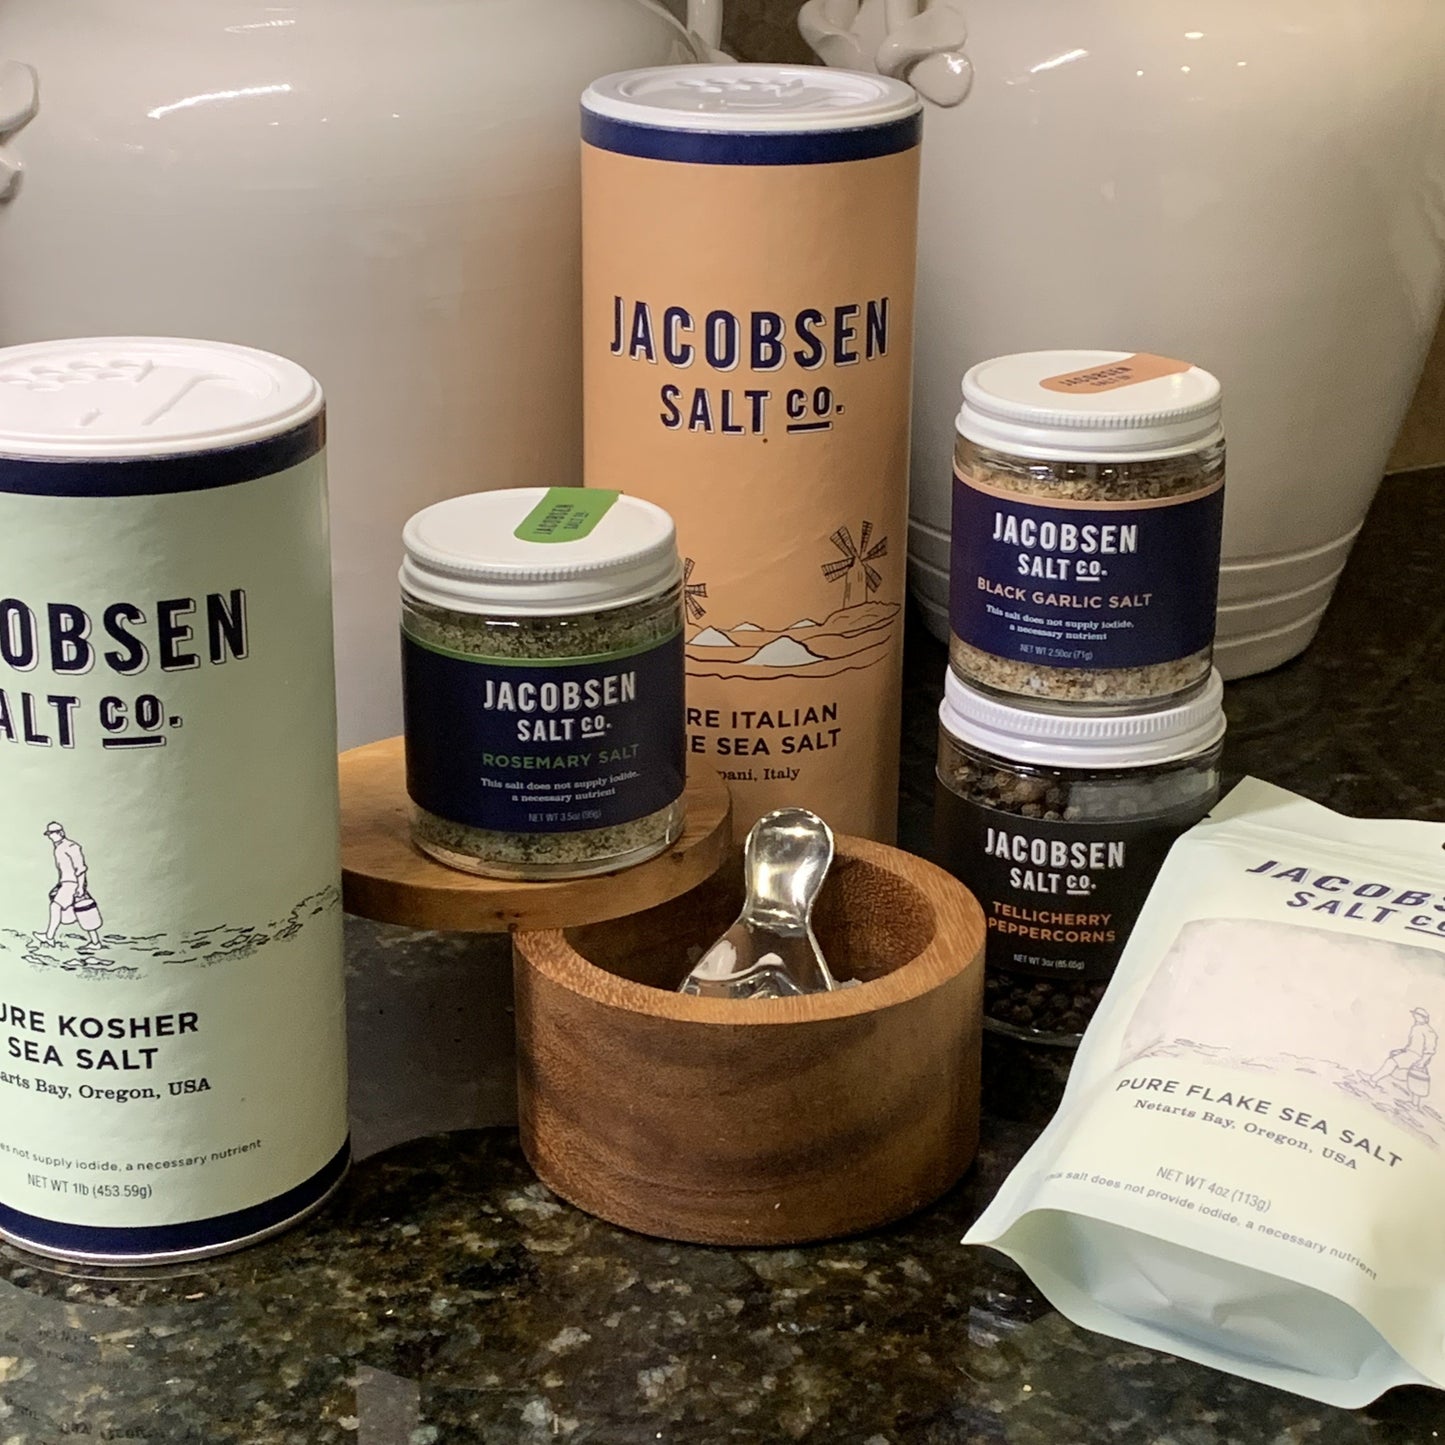 Showing a collection of products form Jacobsen Salt co. Kosher Sea Salt, Rosemary Salt, Black Garlic Salt , Tellicherry Peppercorns and Pure Italian Sea Salt